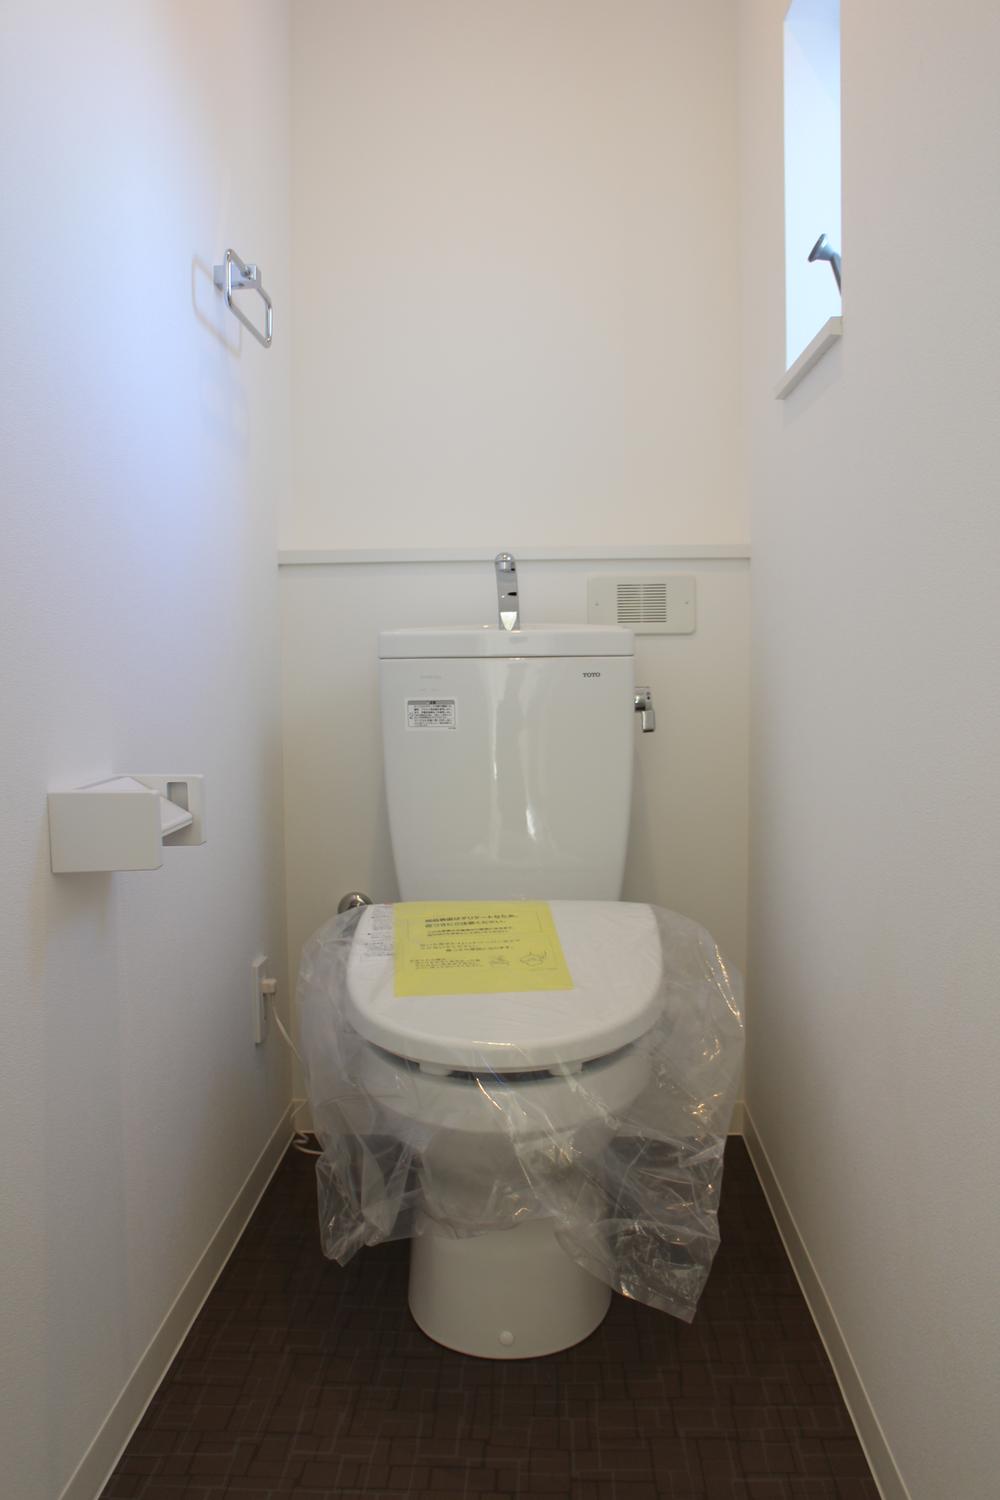 Toilet. Second floor toilet heating toilet seat. 